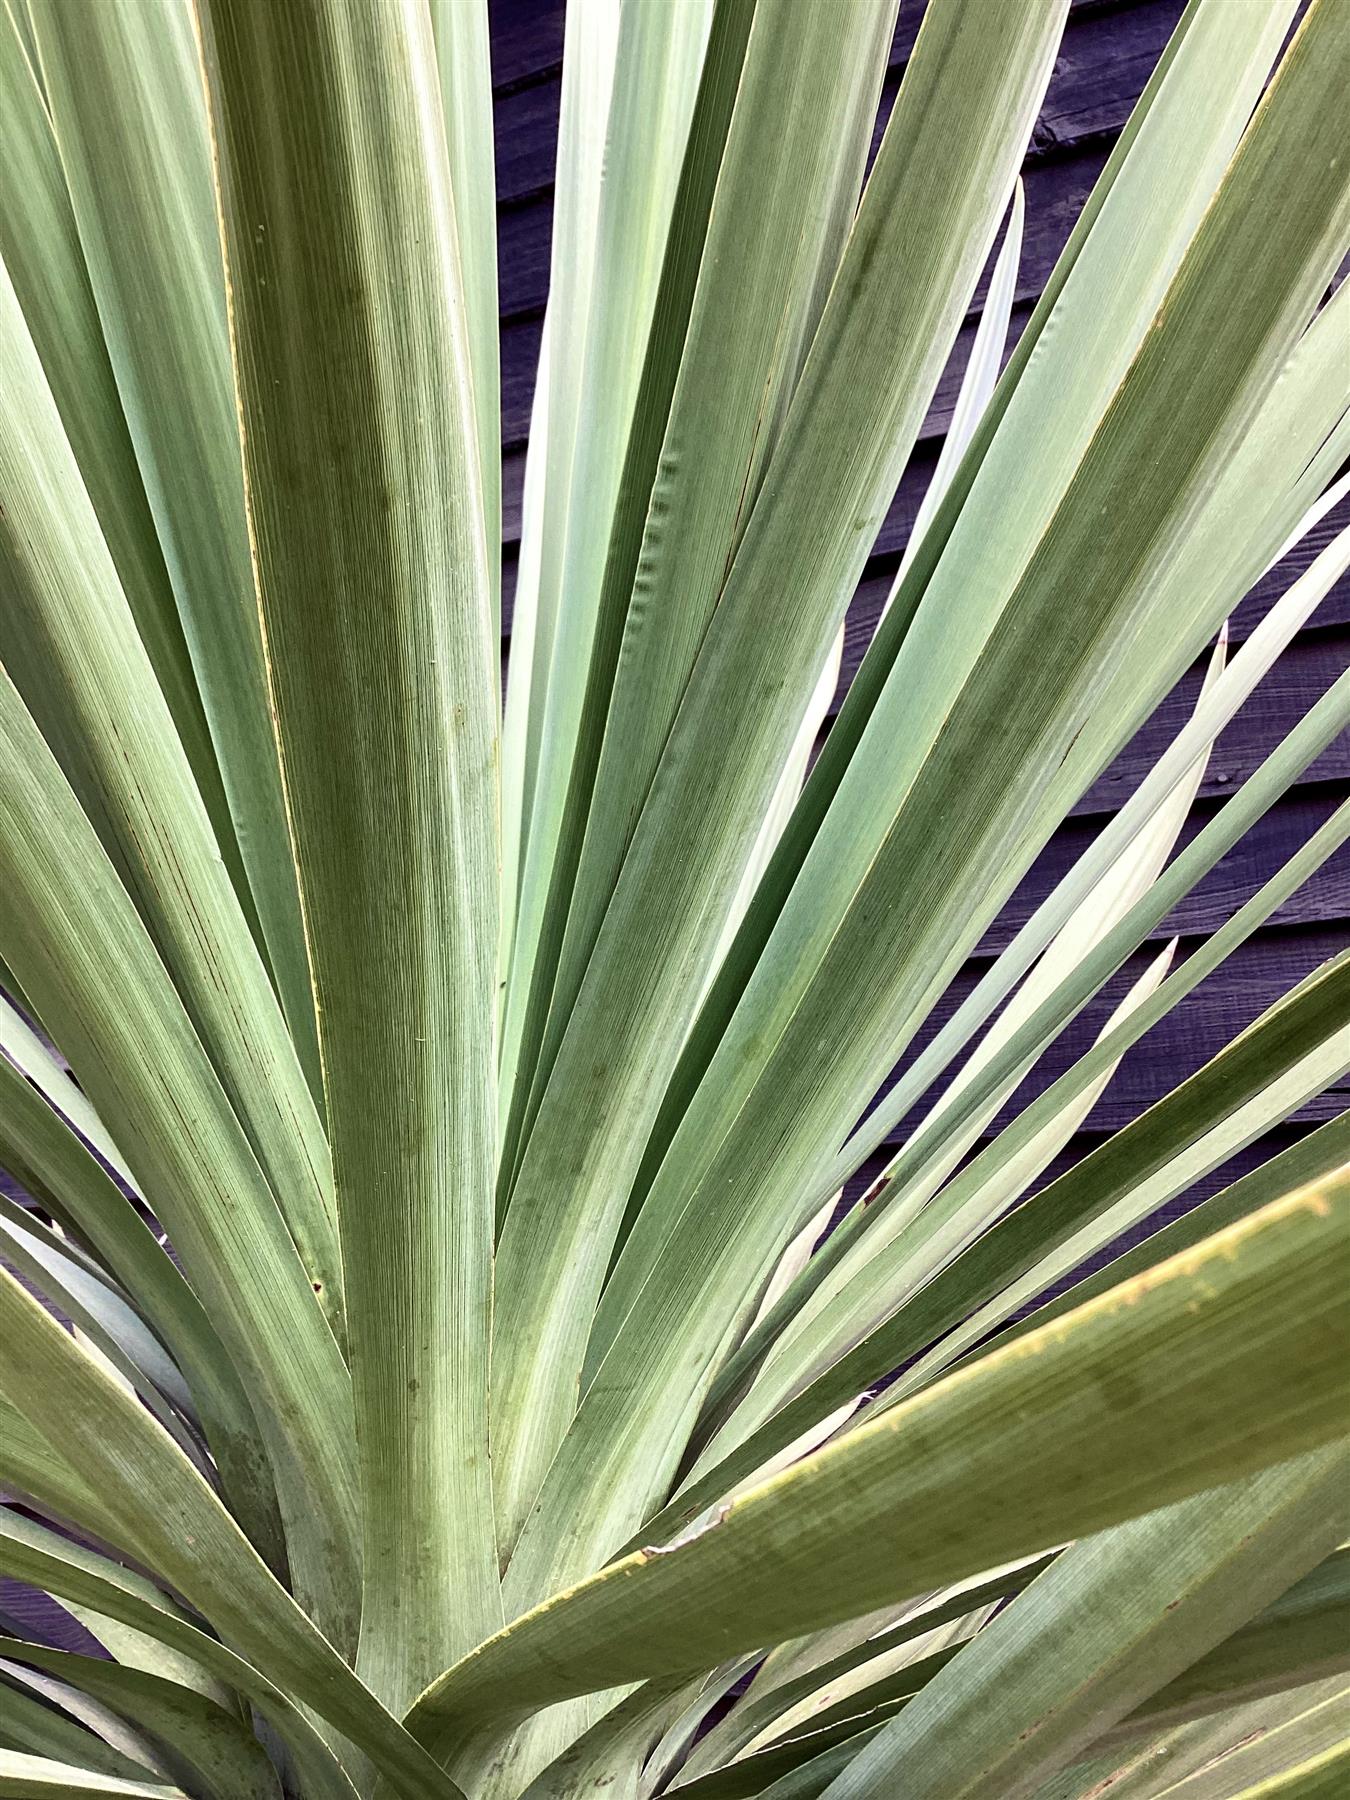 Cordyline australis (cabbage palm) | New Zealand Cabbage Palm Stem 100-110cm - Girth 26-32cm - Height 170-200cm - 110lt